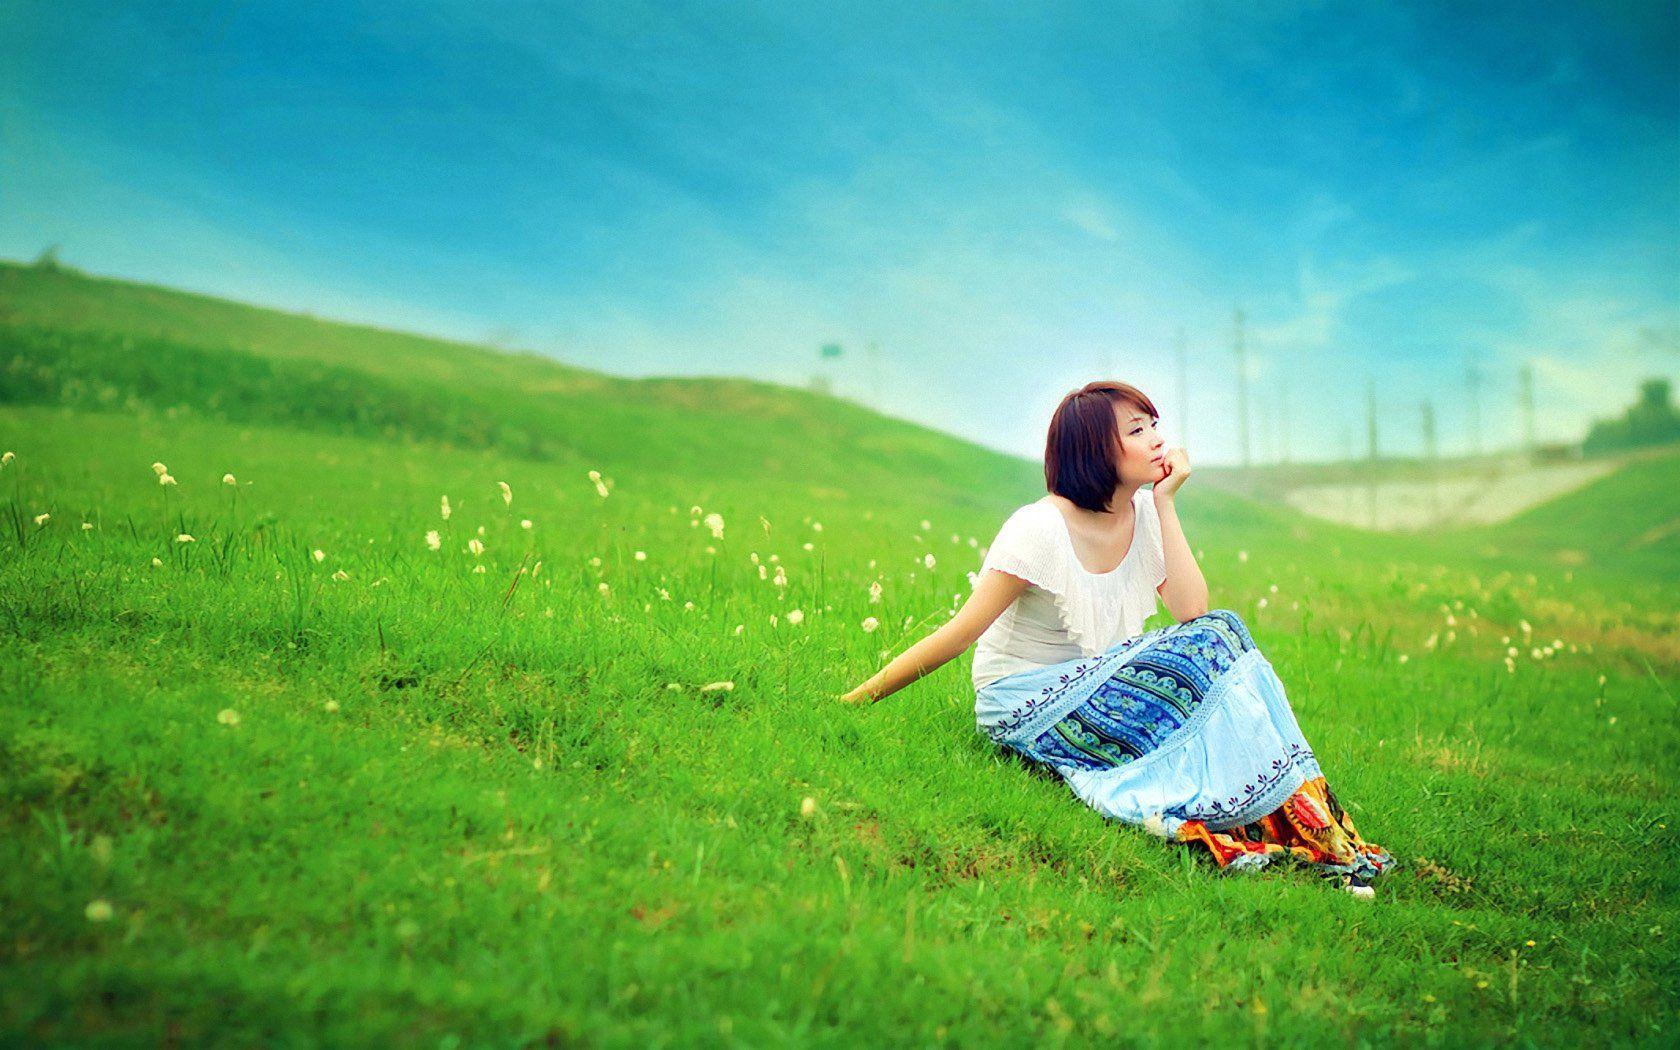 Z Wallpaper Thinking Woman In A Grass x 1050 Men